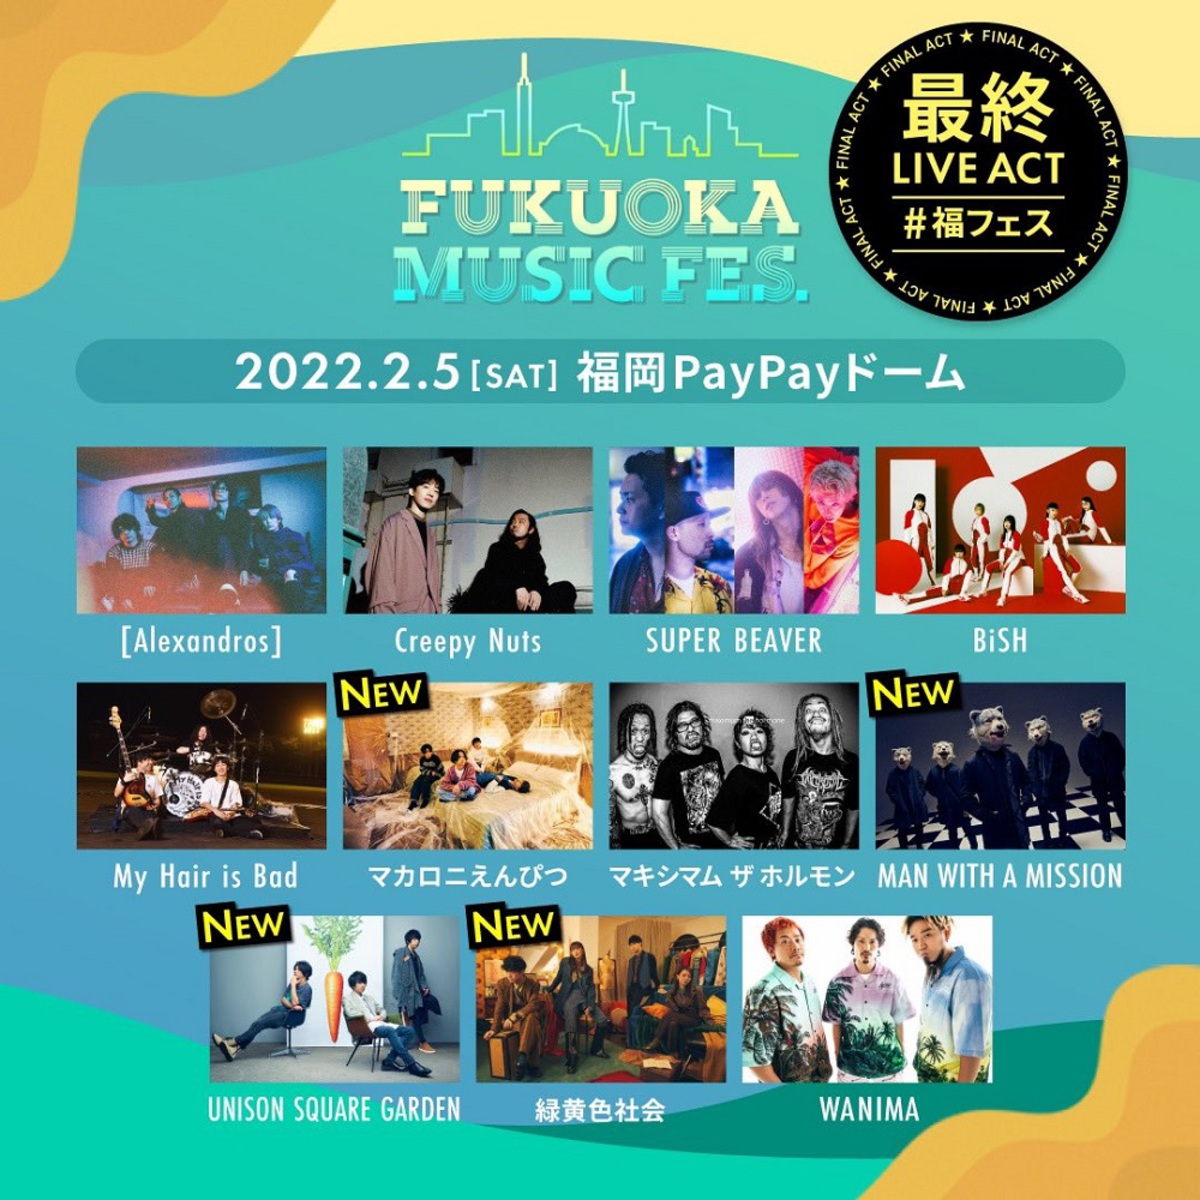 Fukuoka Music Fes 最終ライヴ アクトでman With A Mission Unison Square Garden 緑黄色社会 マカロニえんぴつ出演決定